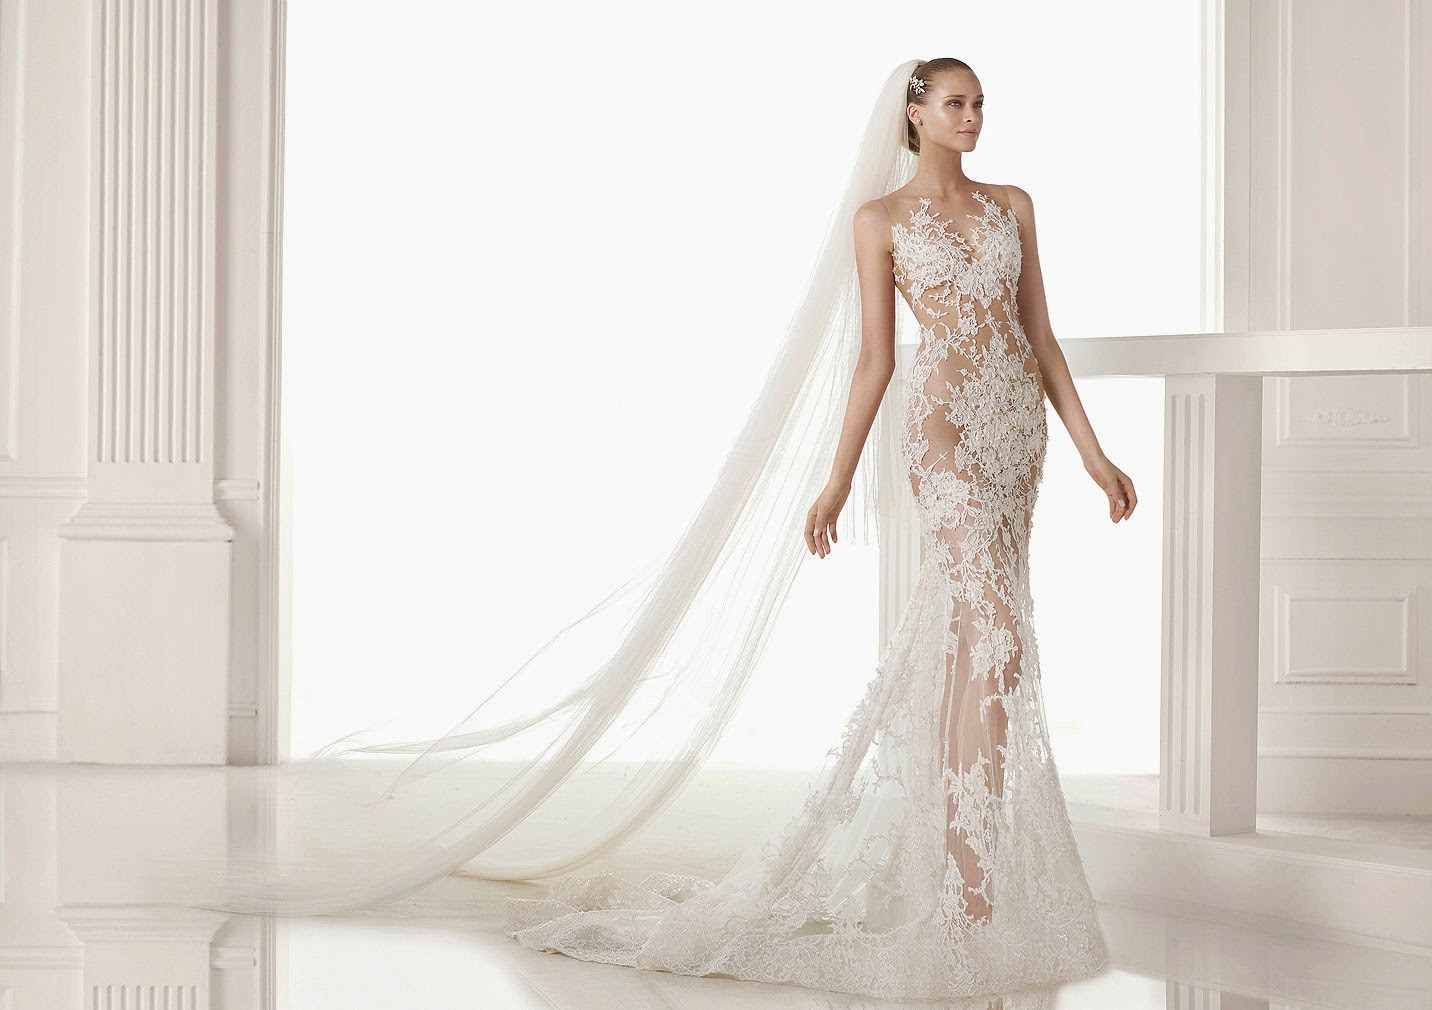 Mermaid Hochzeitskleid
 Mermaid Wedding Dresses Pronovias 2015 Collection – The